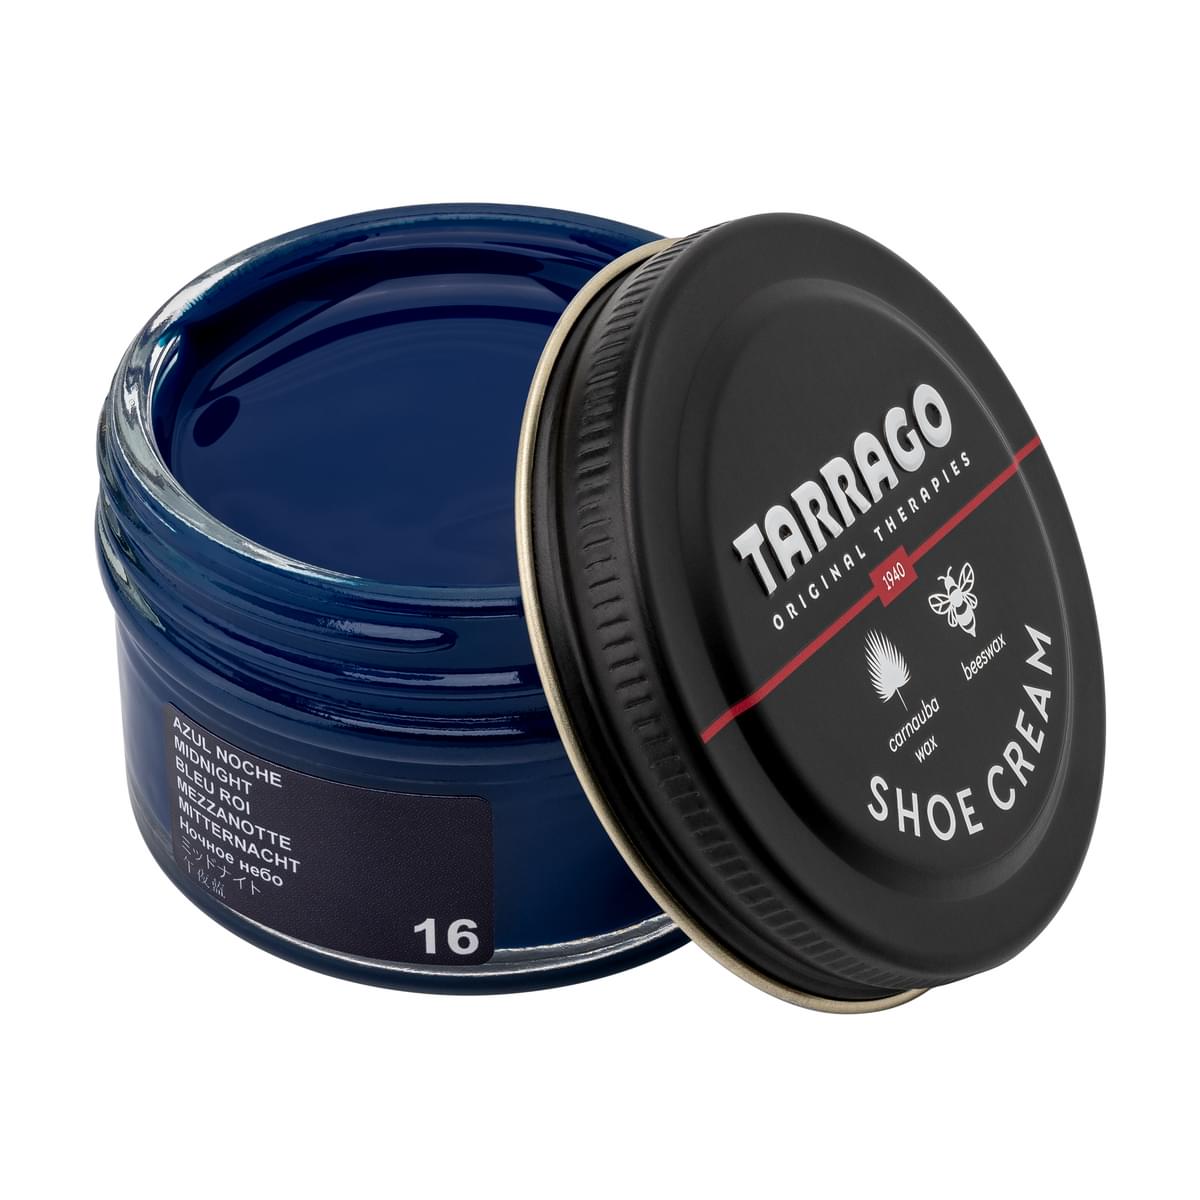 Tarrago Shoe Cream  - Midnight - 16